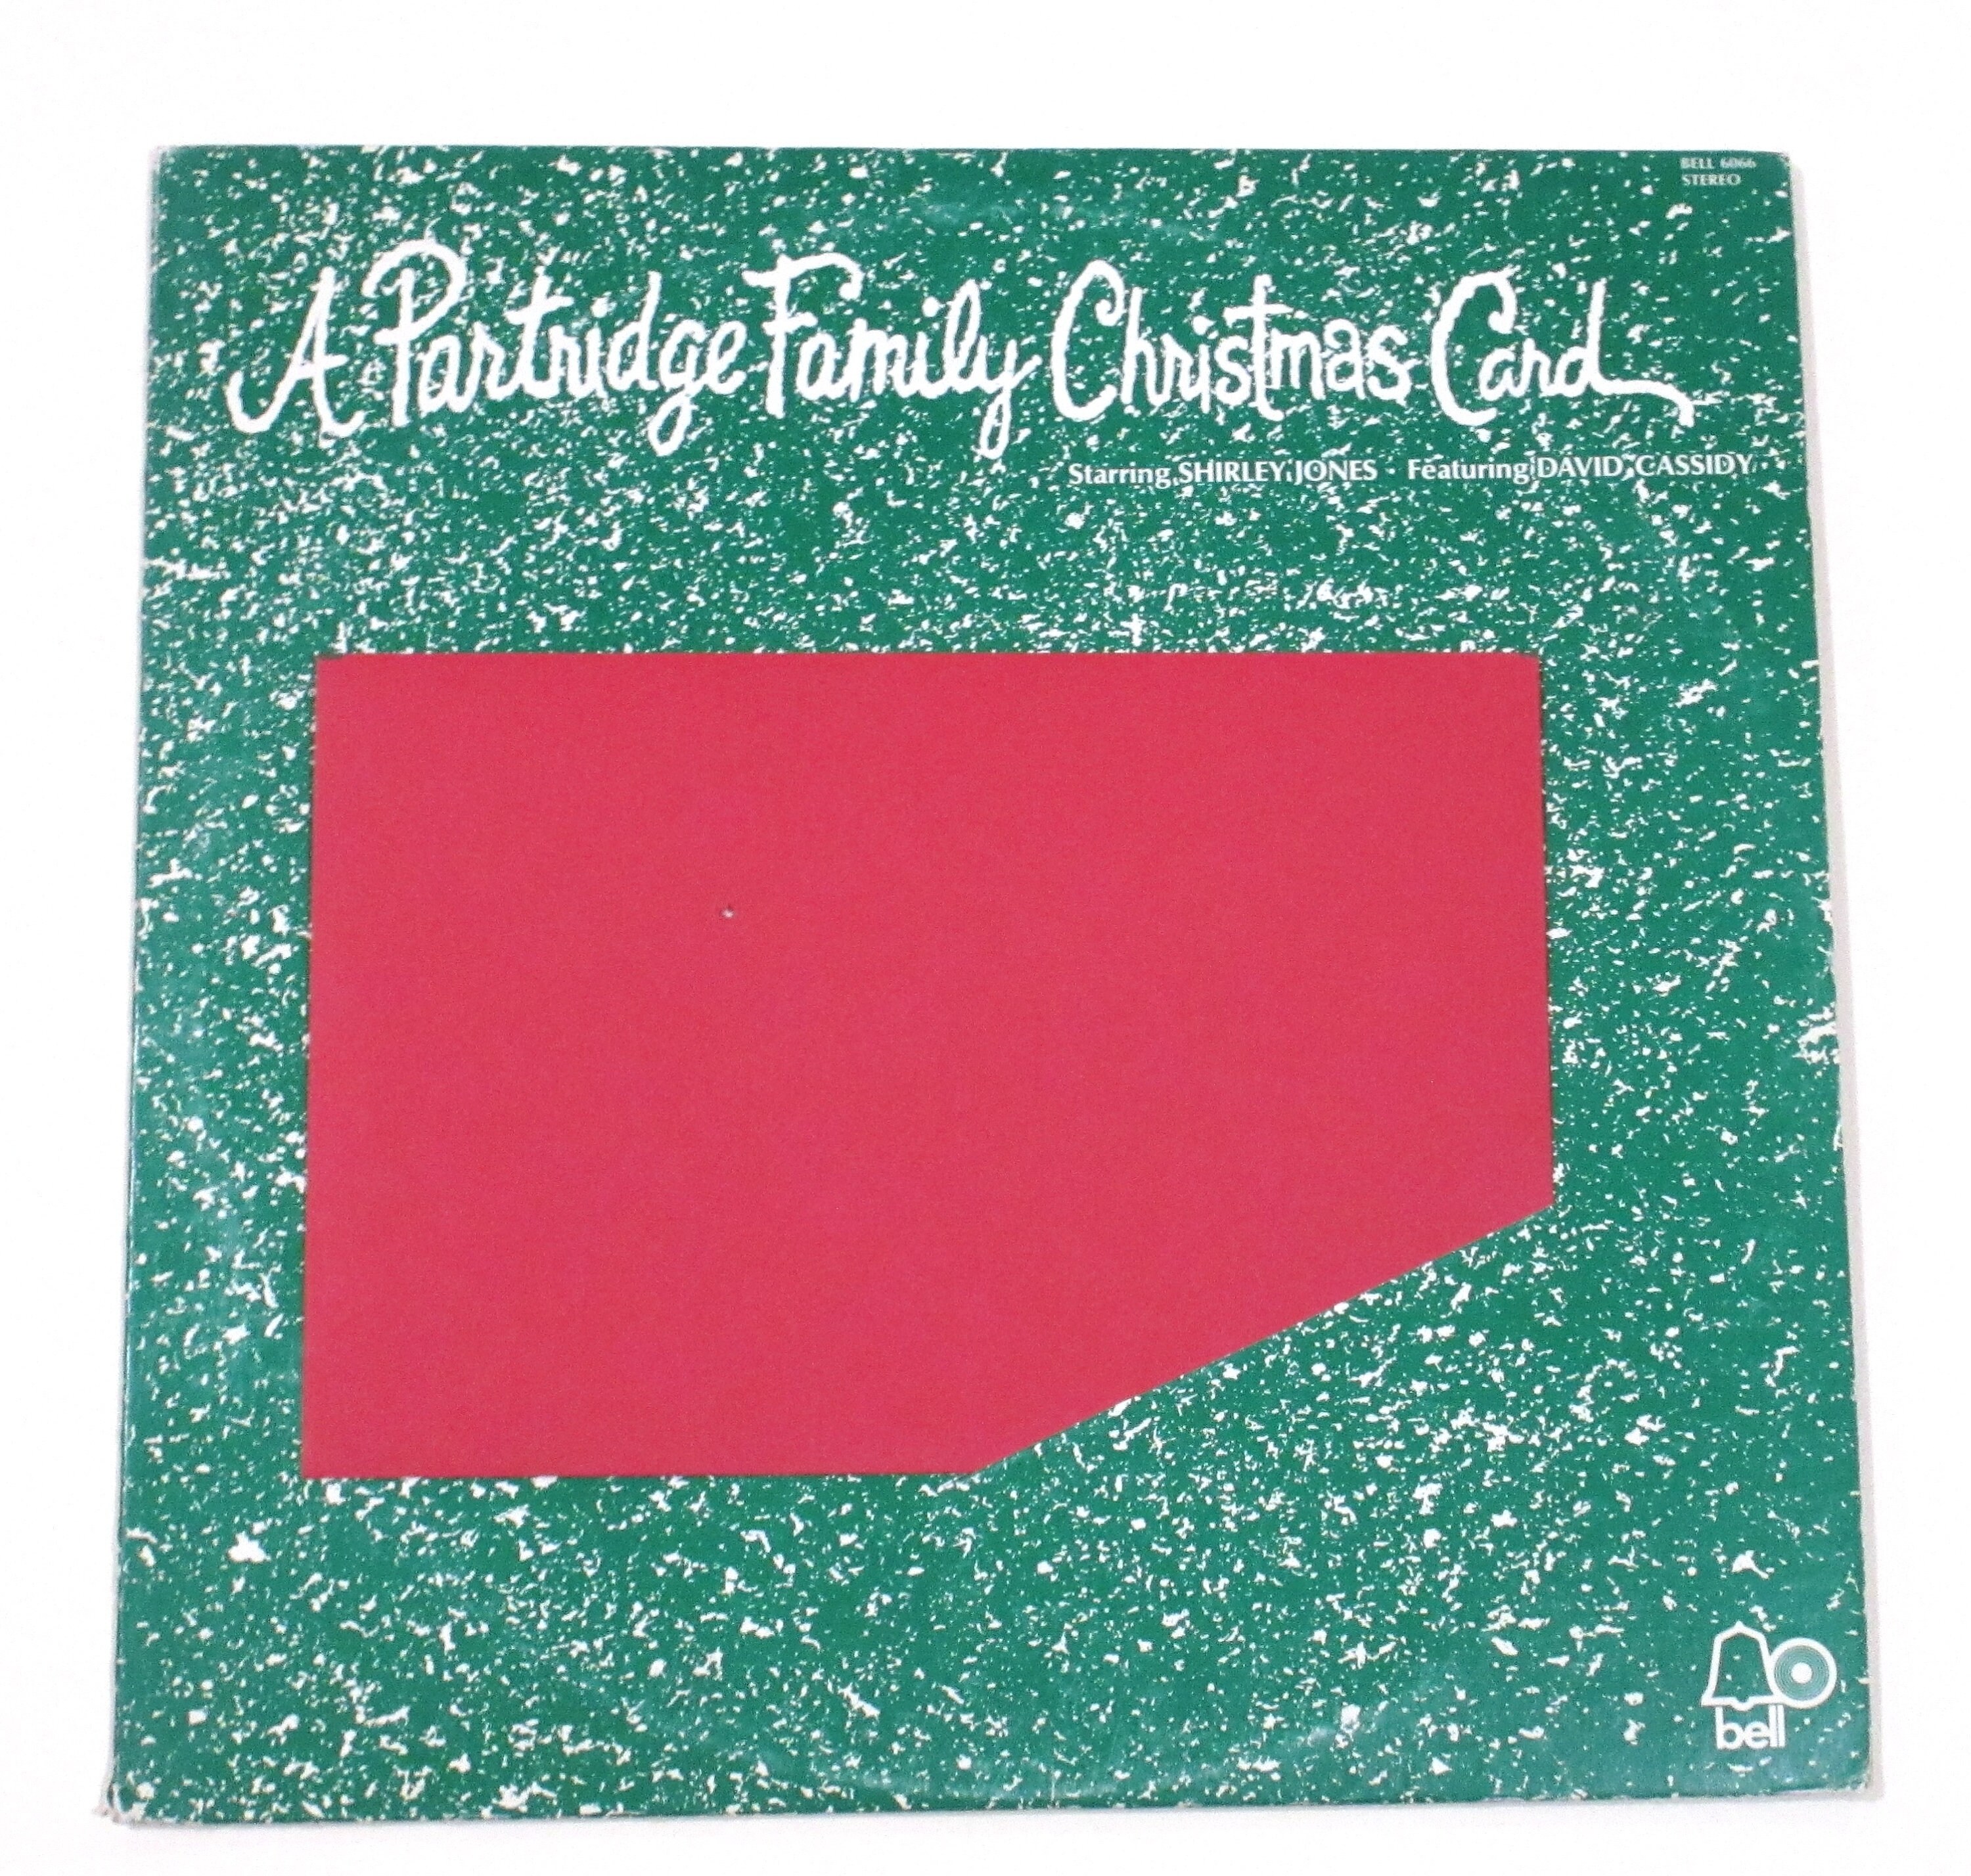 The Partridge Family: A Partridge Family Christmas Card LP Record Album